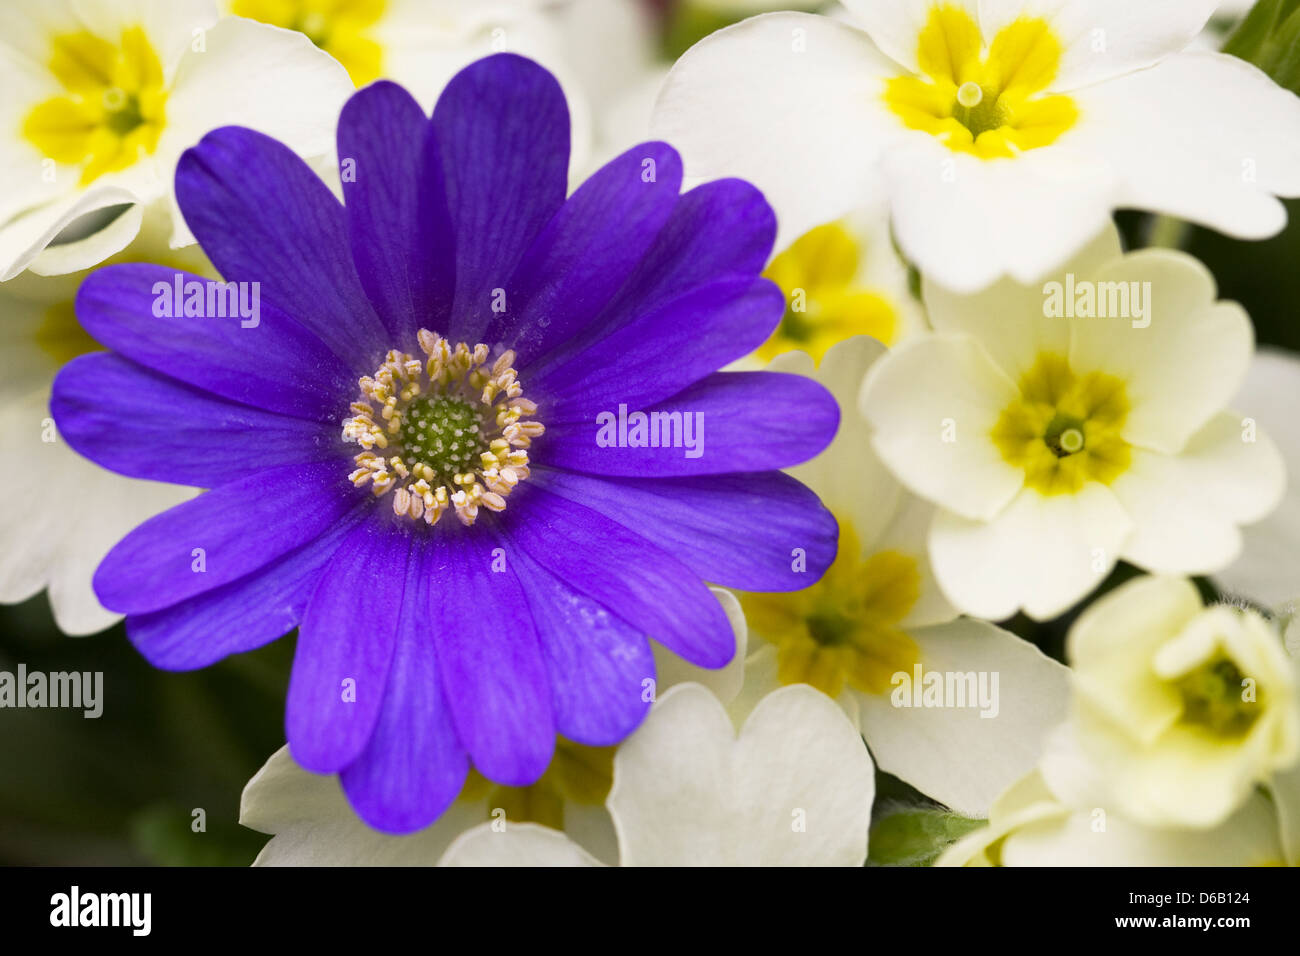 Anemone blanda peeking out amongst the primroses. Stock Photo